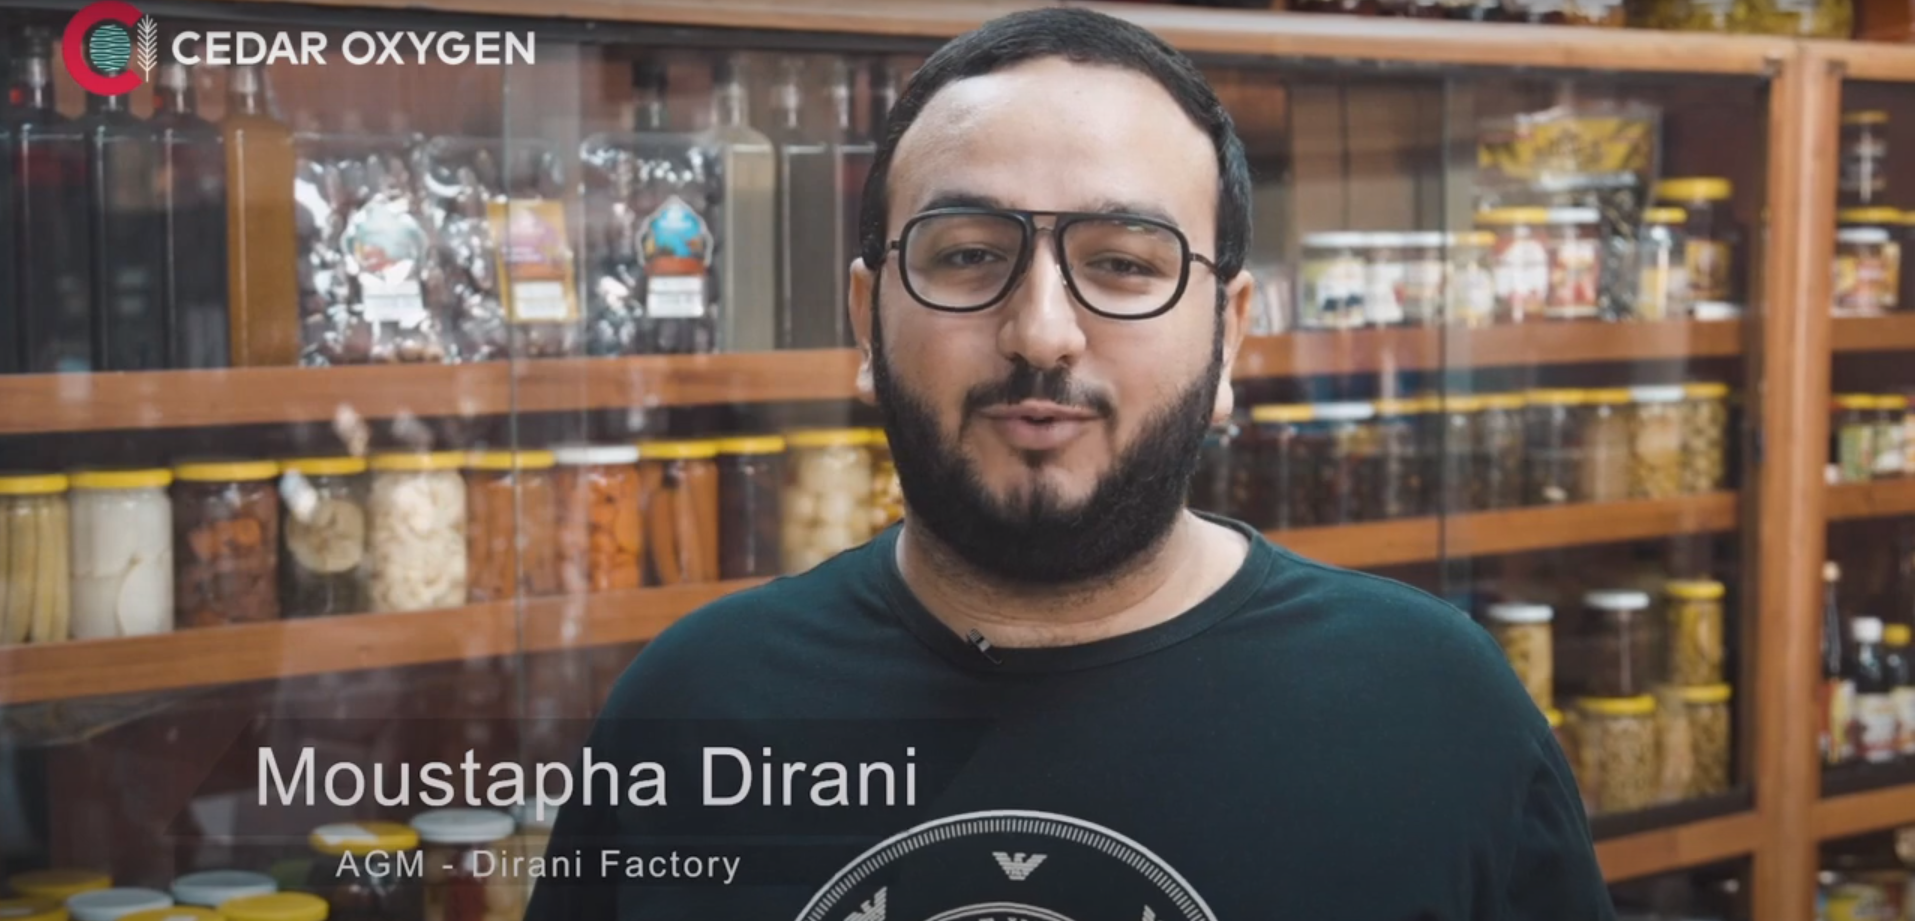 Moustapha Dirani, AGM of Dirani Factory